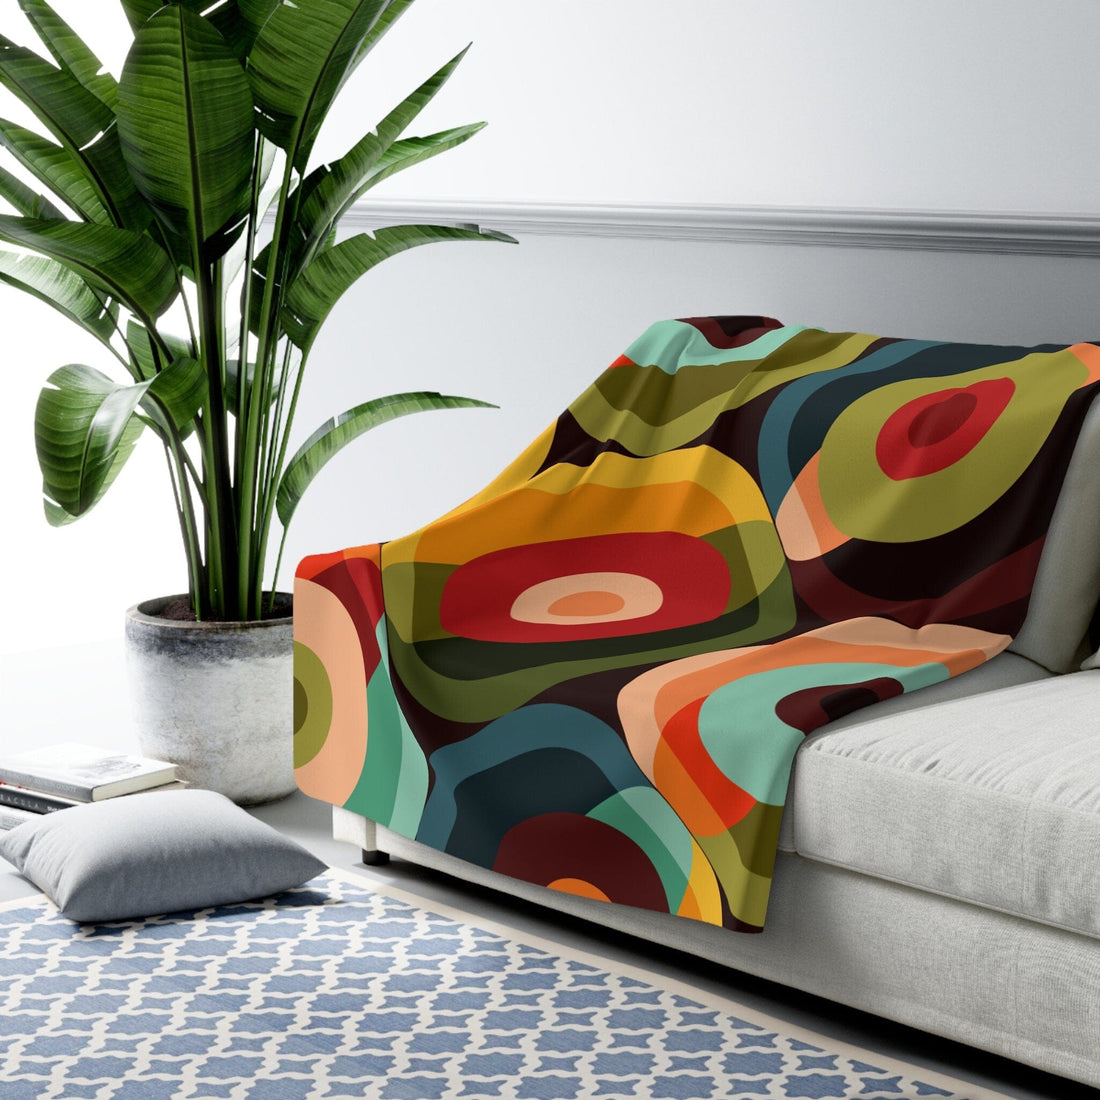 Kate McEnroe New York 70s Psychedelic Orb Geometric Blanket, Retro Colorful Circles, MCM Fleece Living Room Decor - KM13729723Blankets18004440795093941152